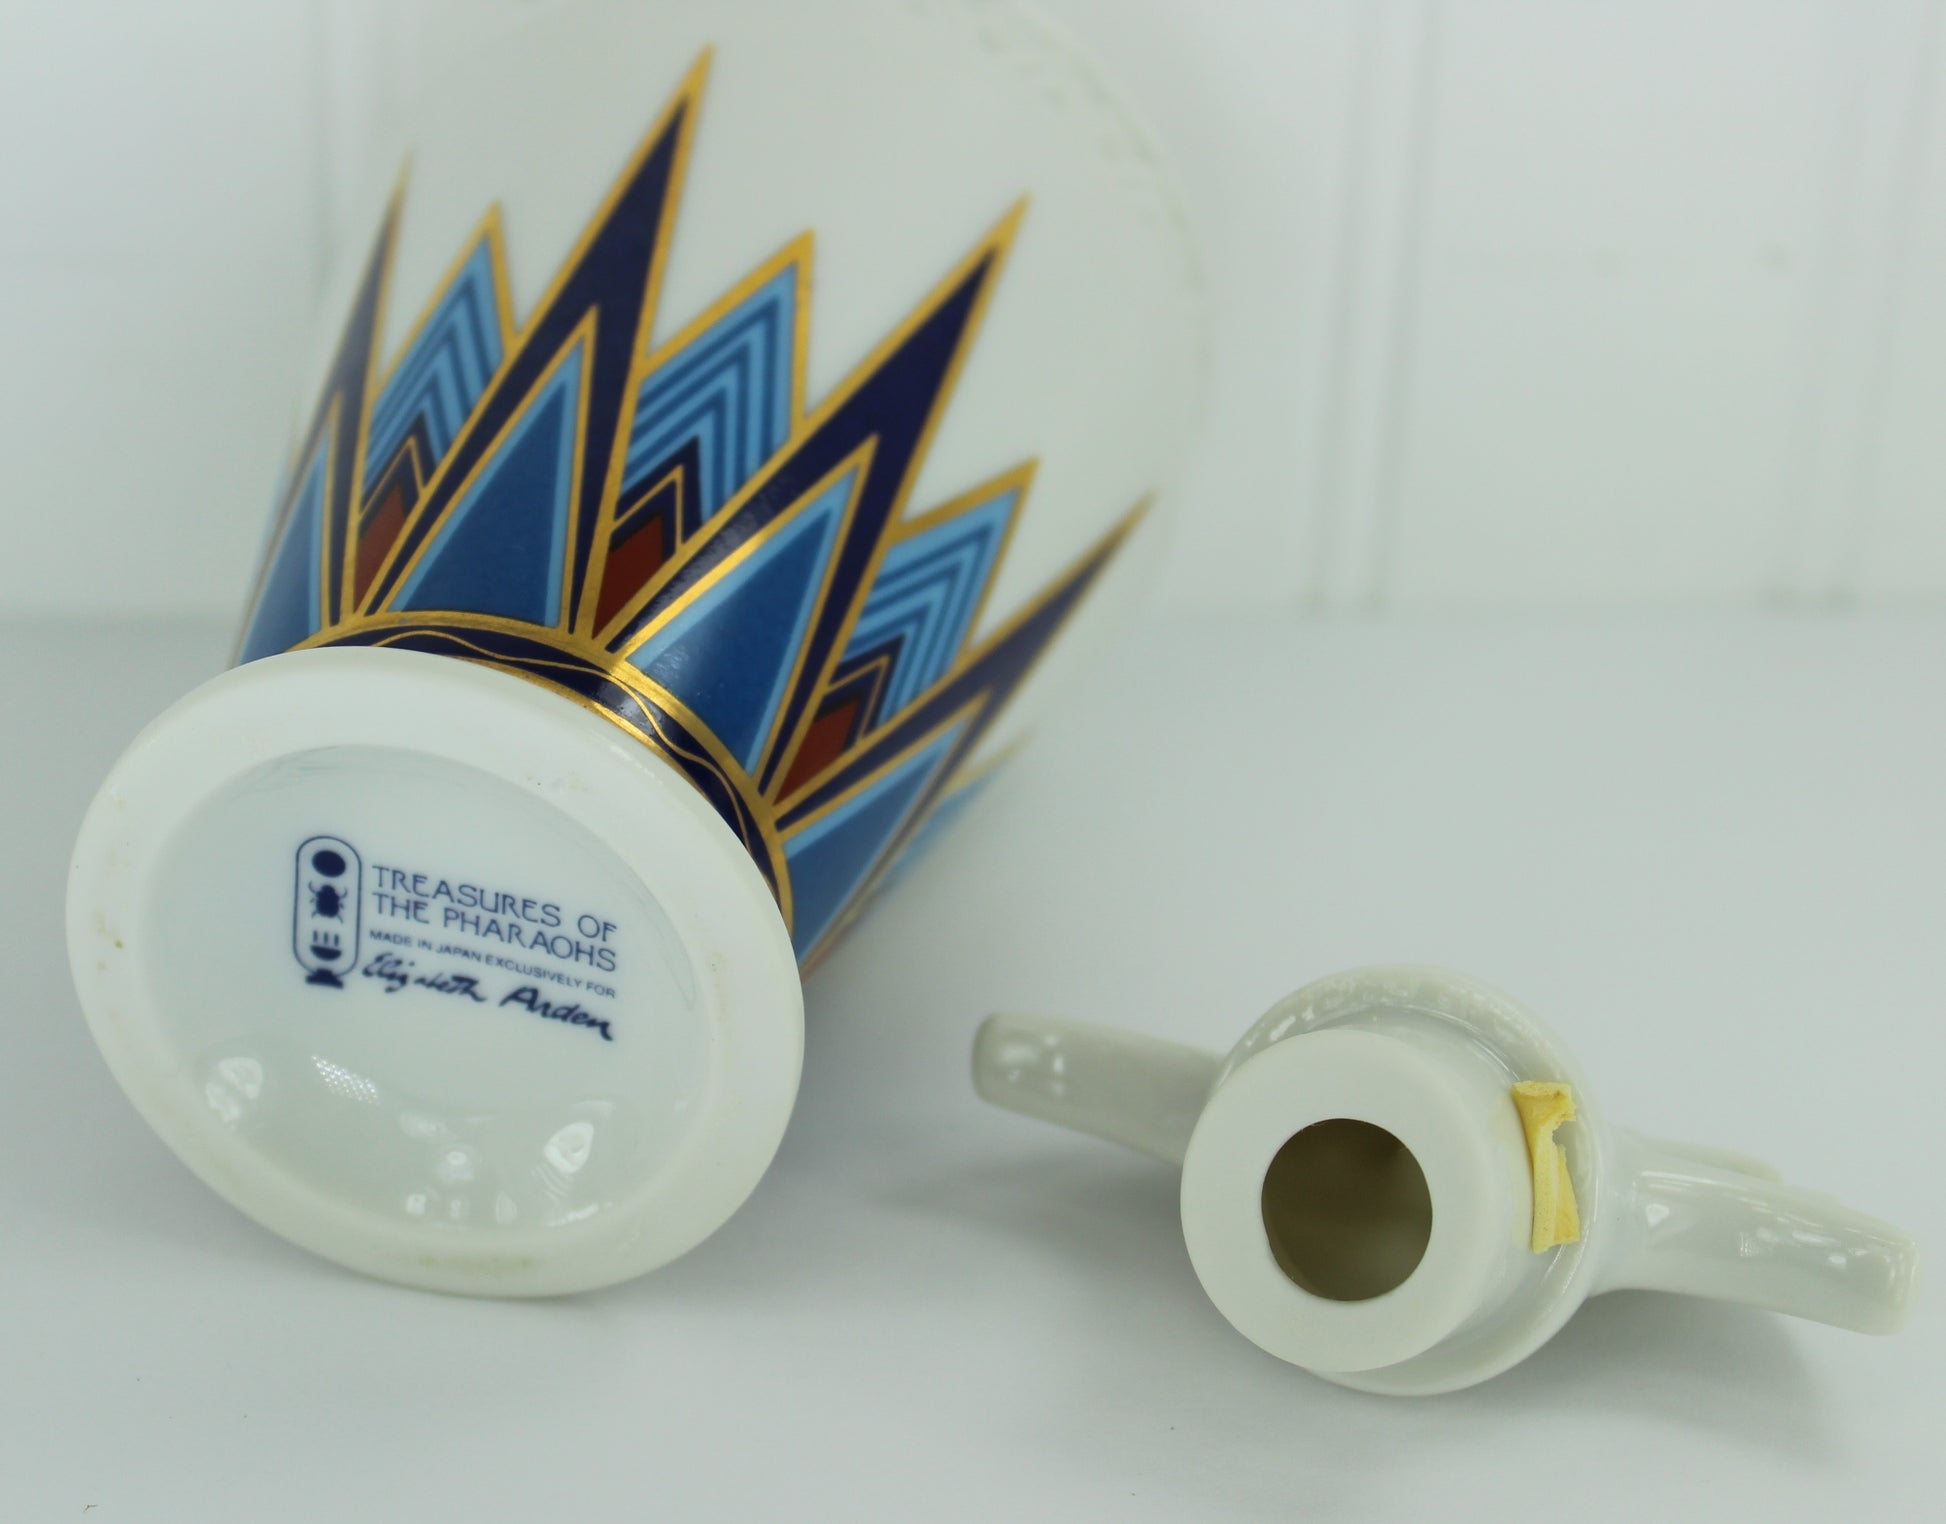 Vintage 1982 Treasures of Pharoahs Eliz Arden Collection Royal Pyramid Vase Egyp marked by maker